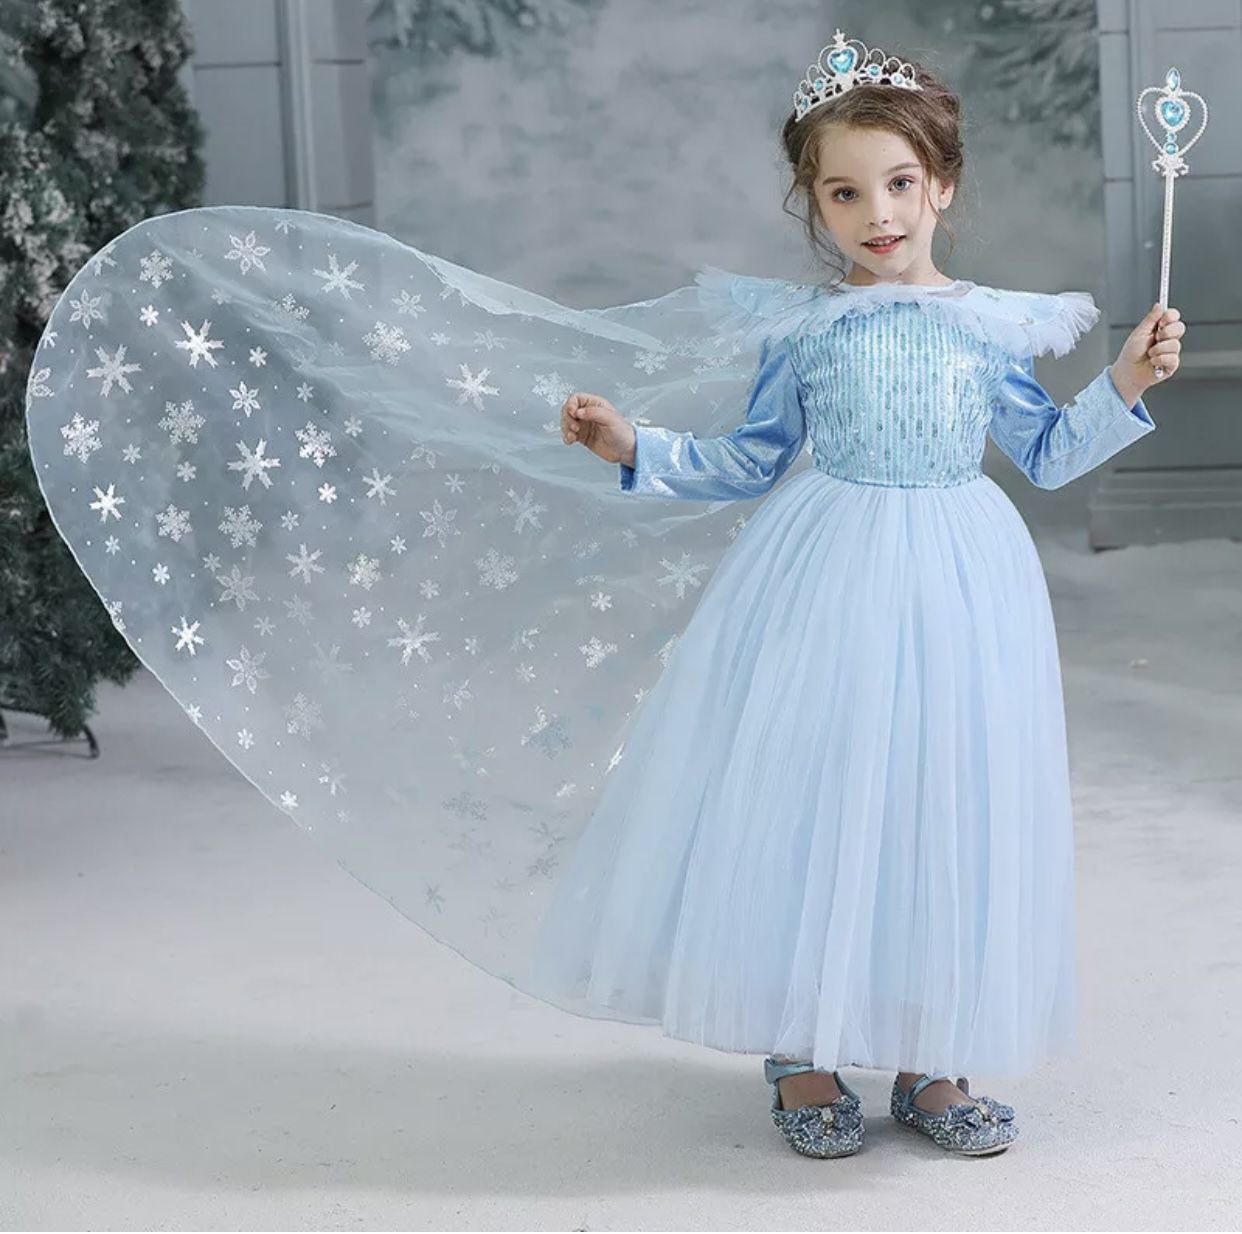 Costume, Elsa Ice/snow Queen 